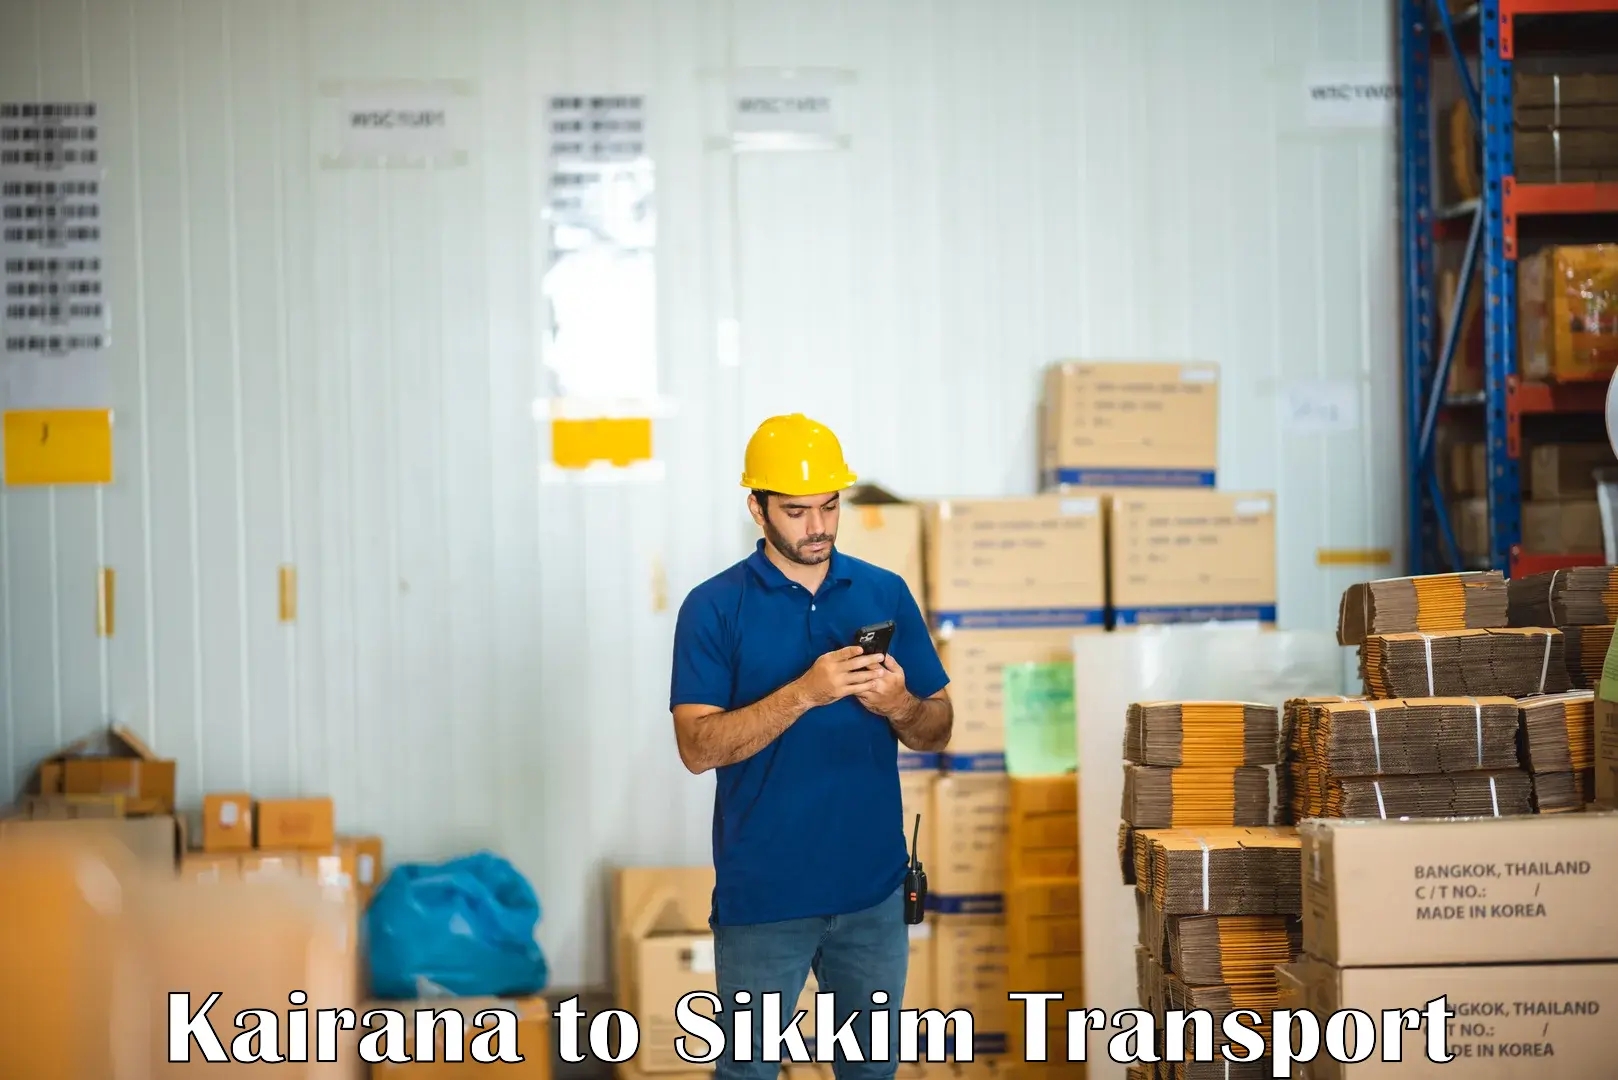 Shipping partner Kairana to East Sikkim